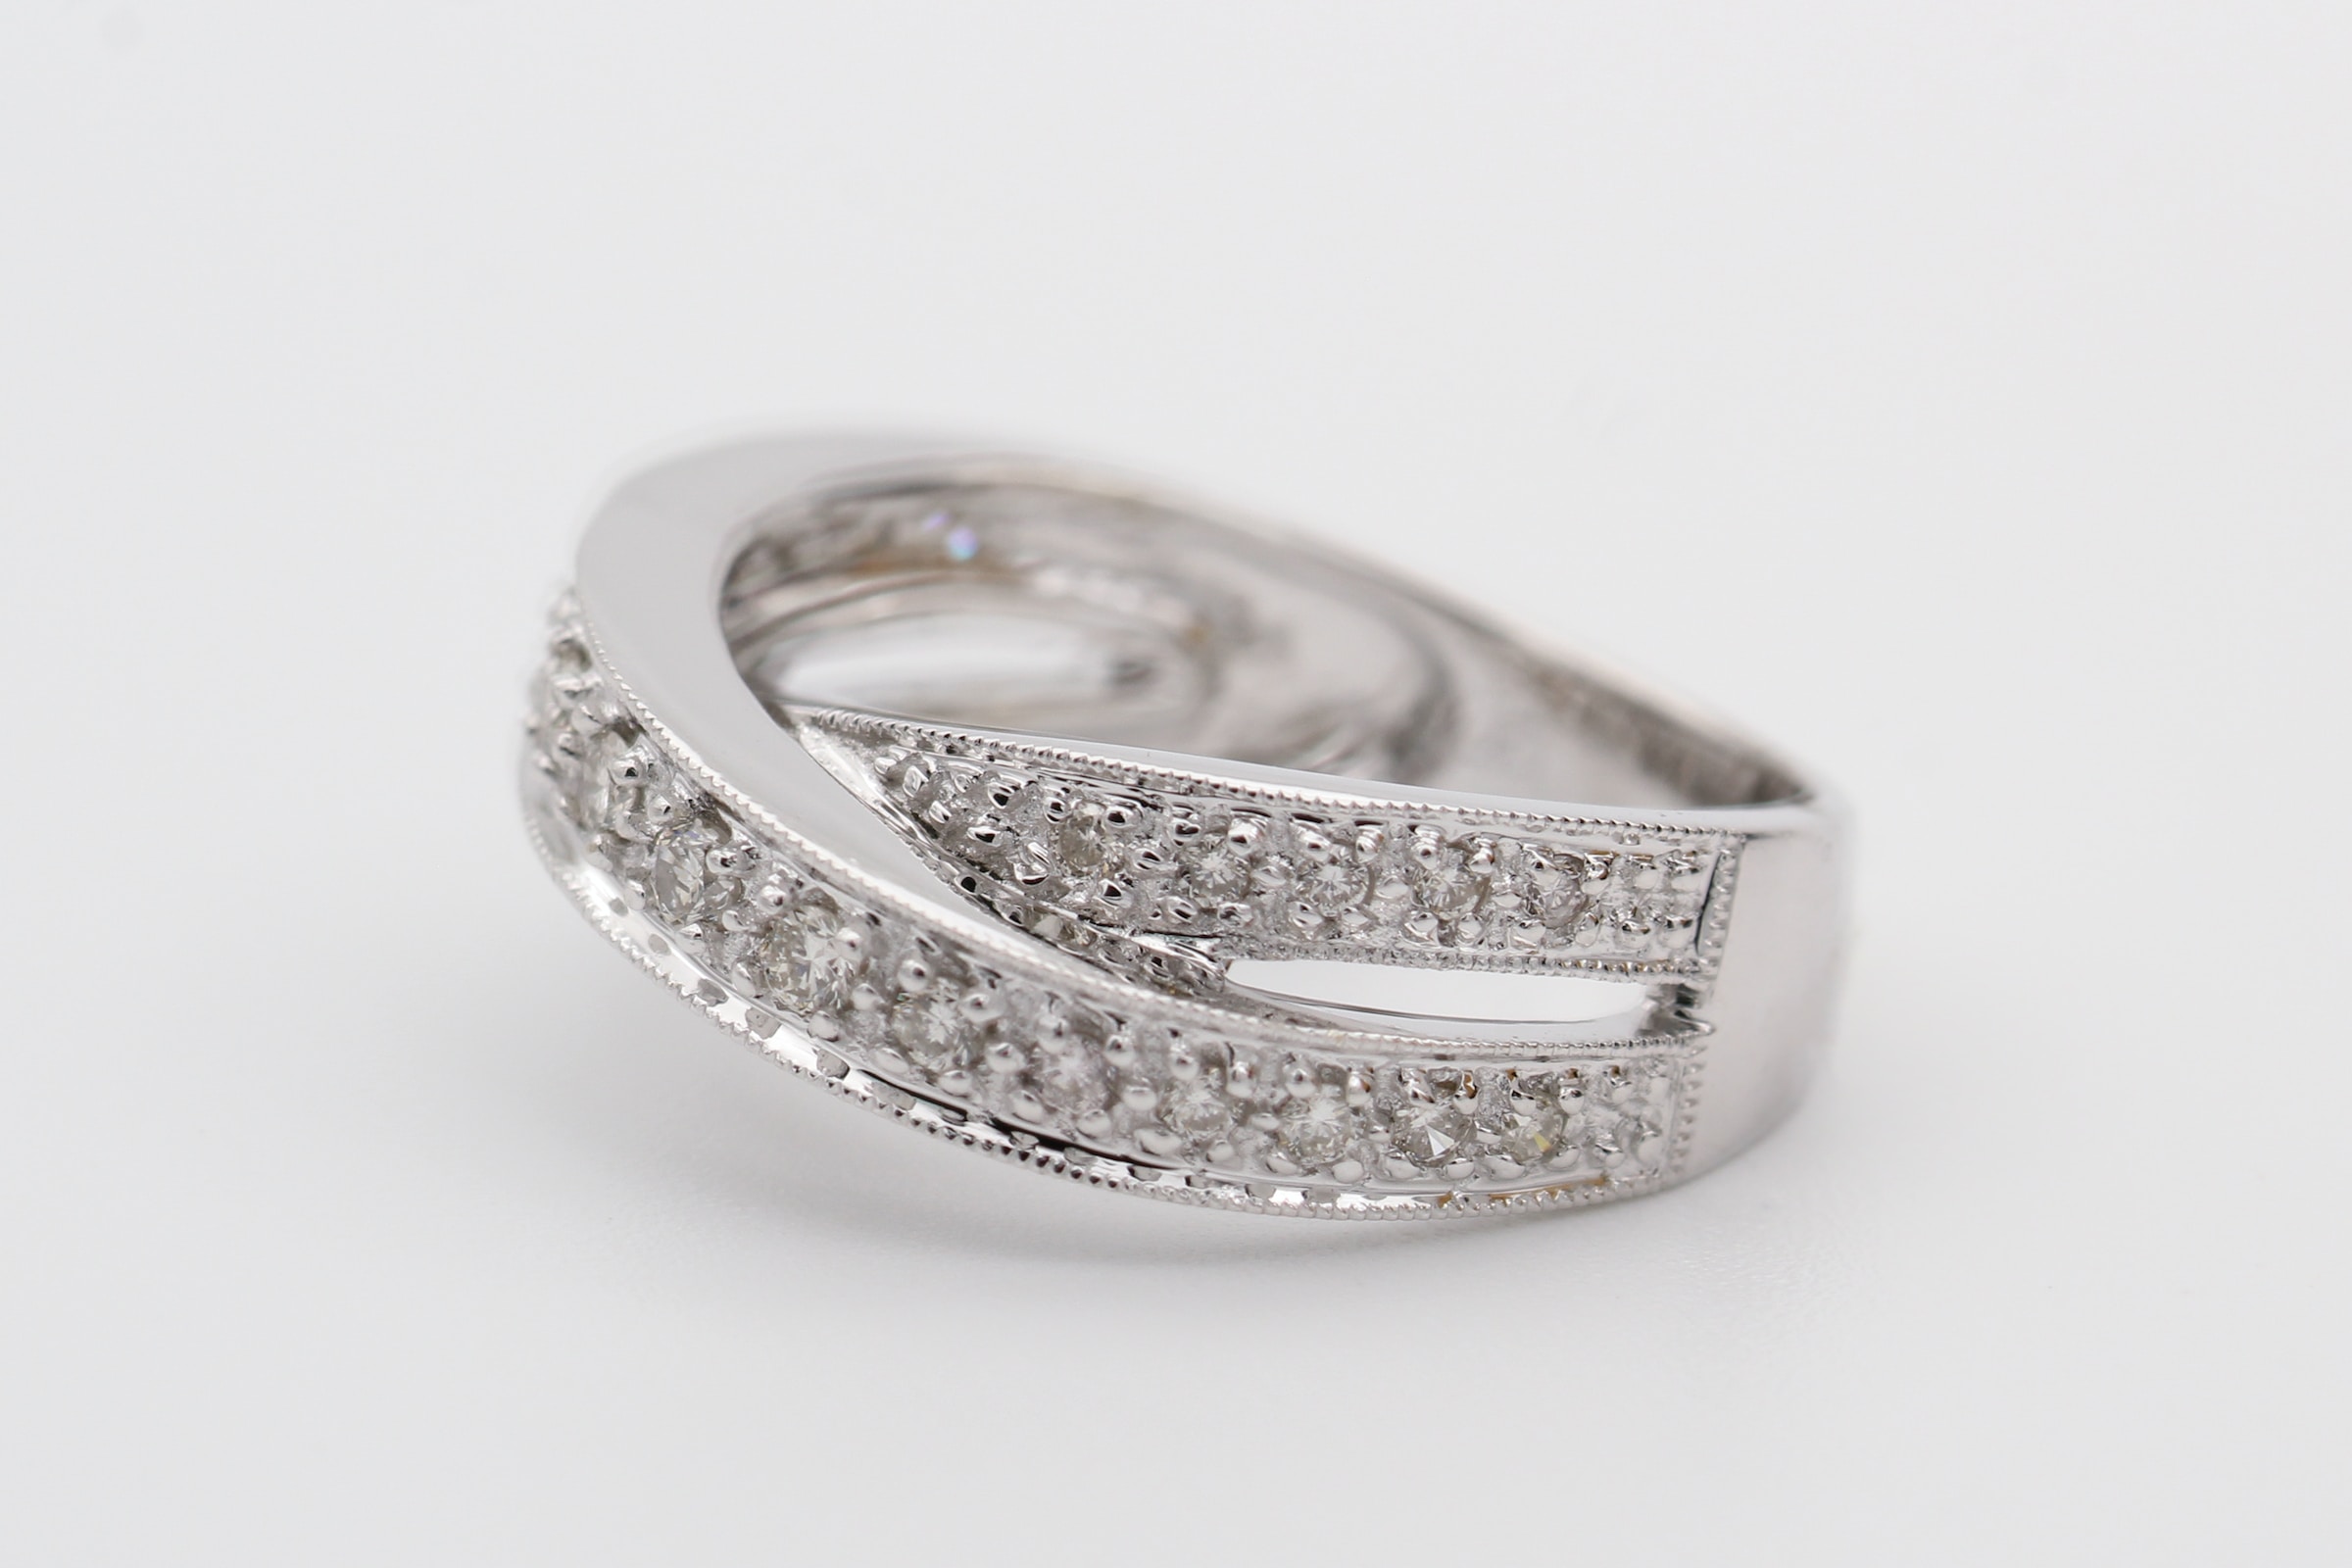 Wedding ring. | Source: Unsplash